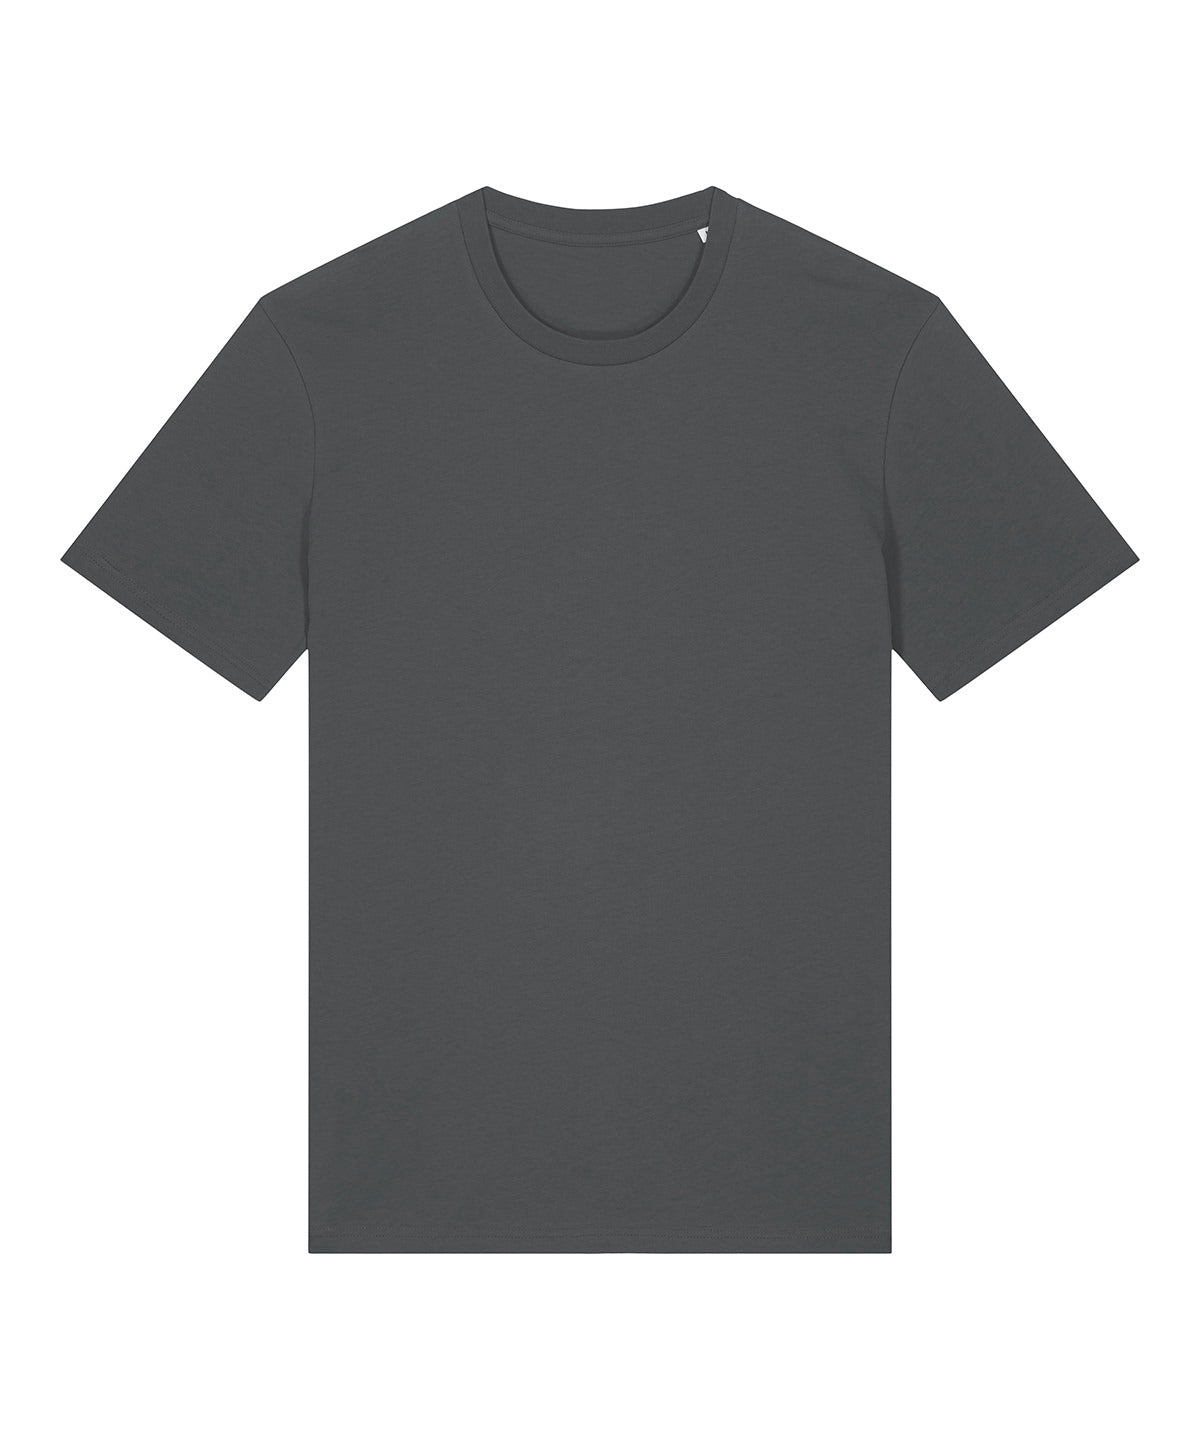 Unisex Crafter iconic mid-light t-shirt (STTU170)